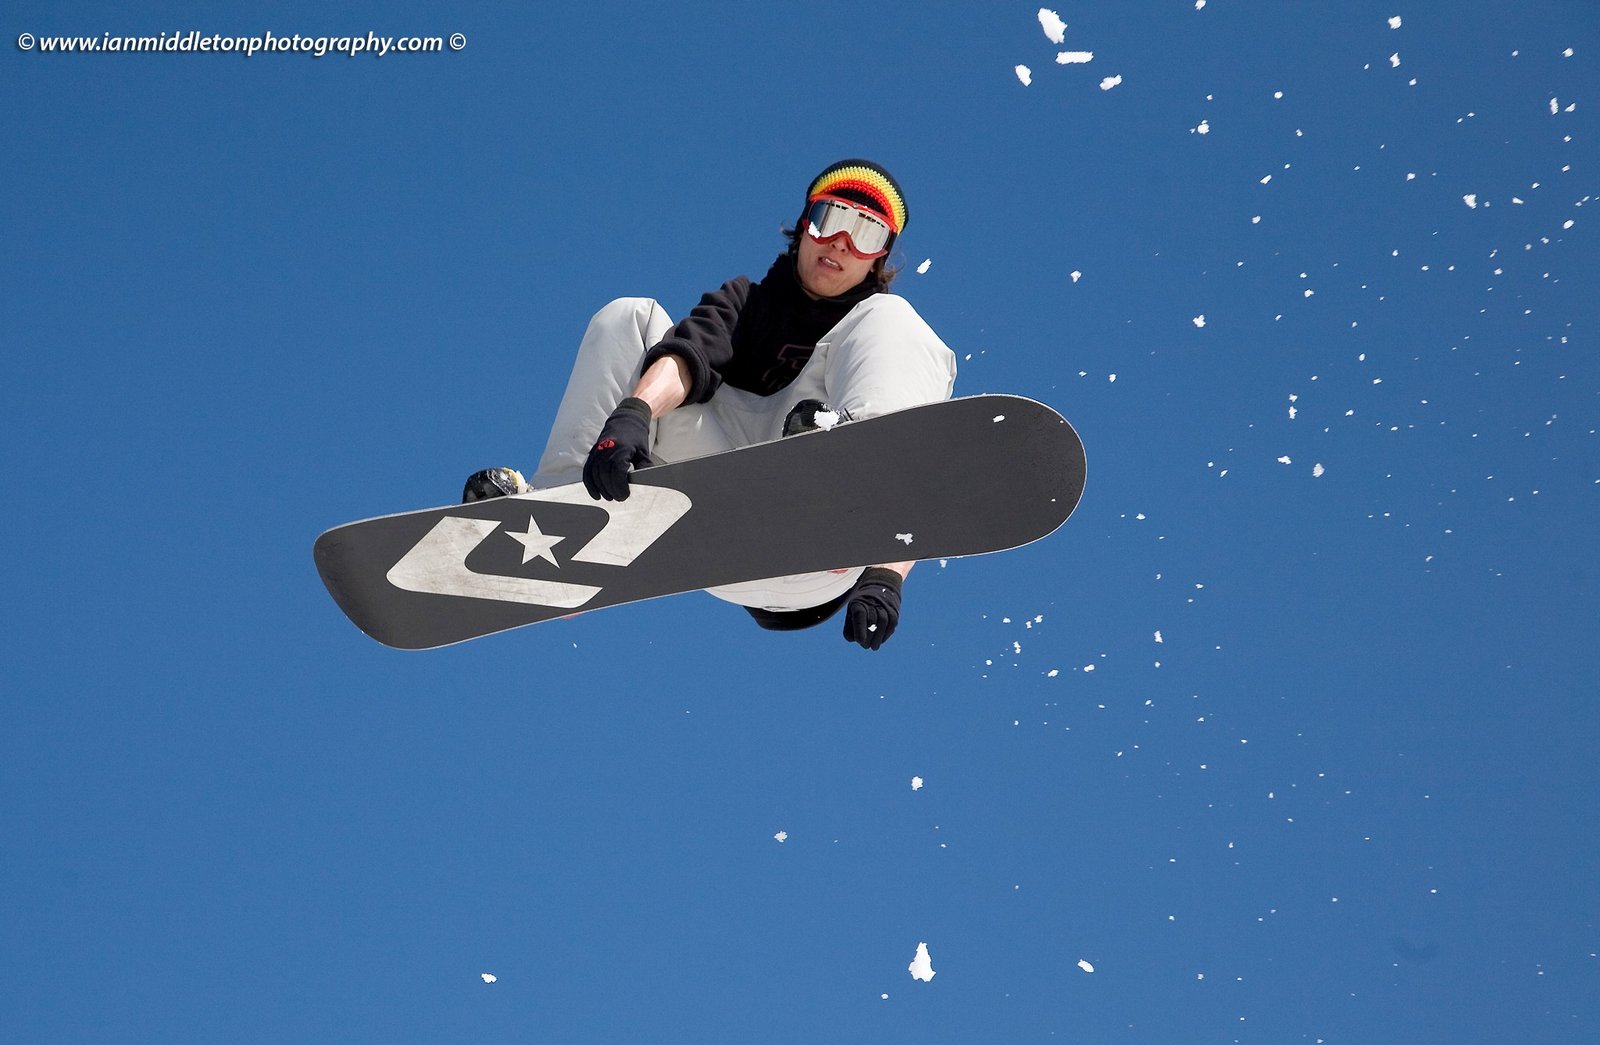 Snowboard jumper at Vogel Mountain, Slovenia